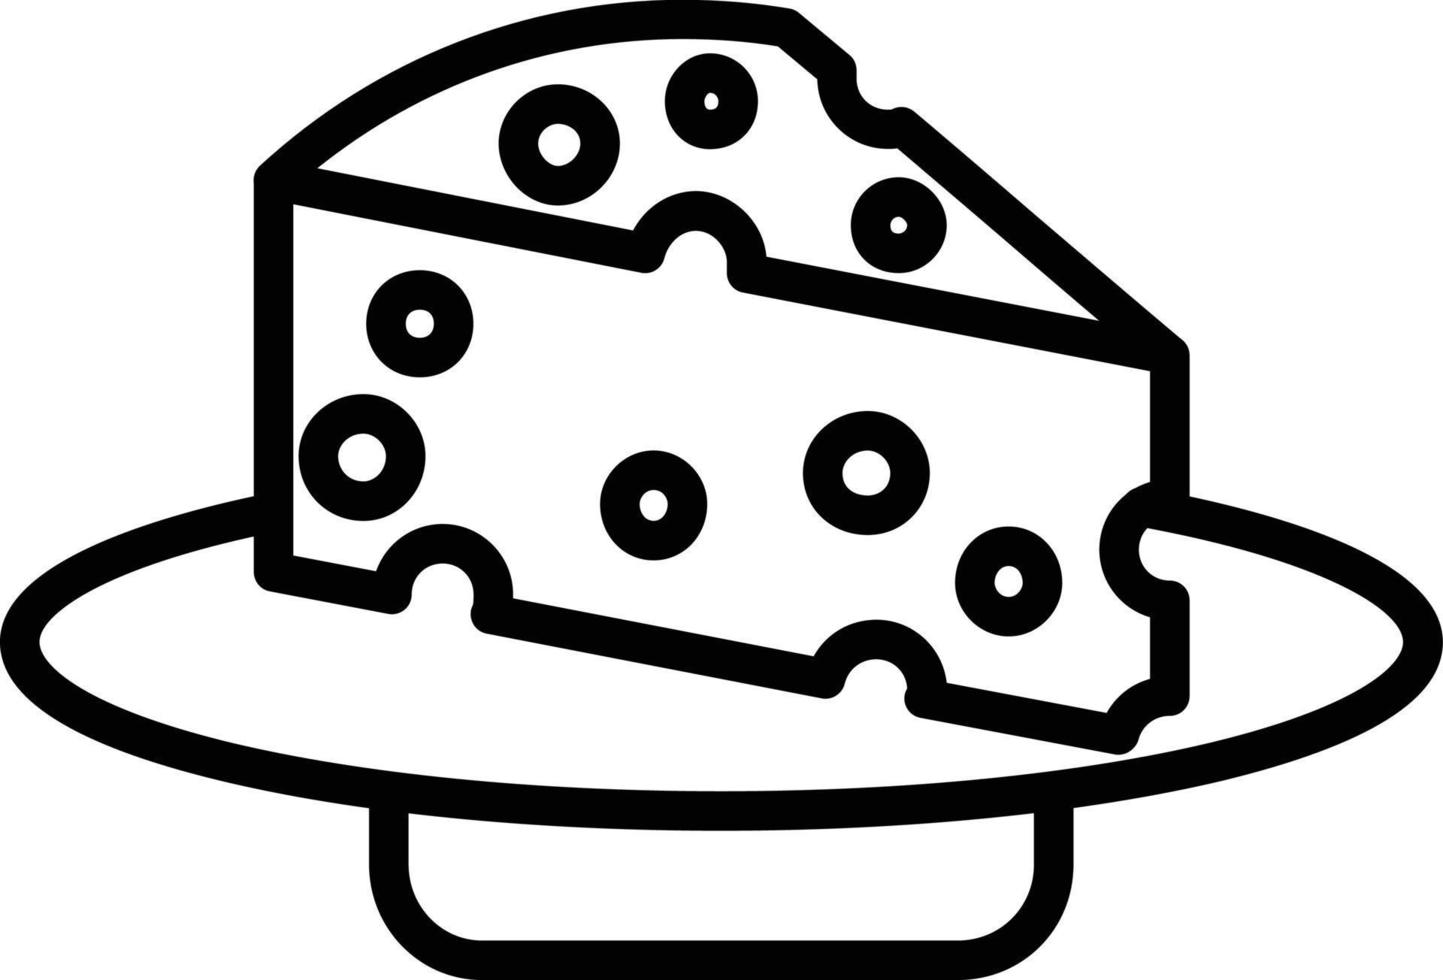 Cheese Serve Line Icon vector